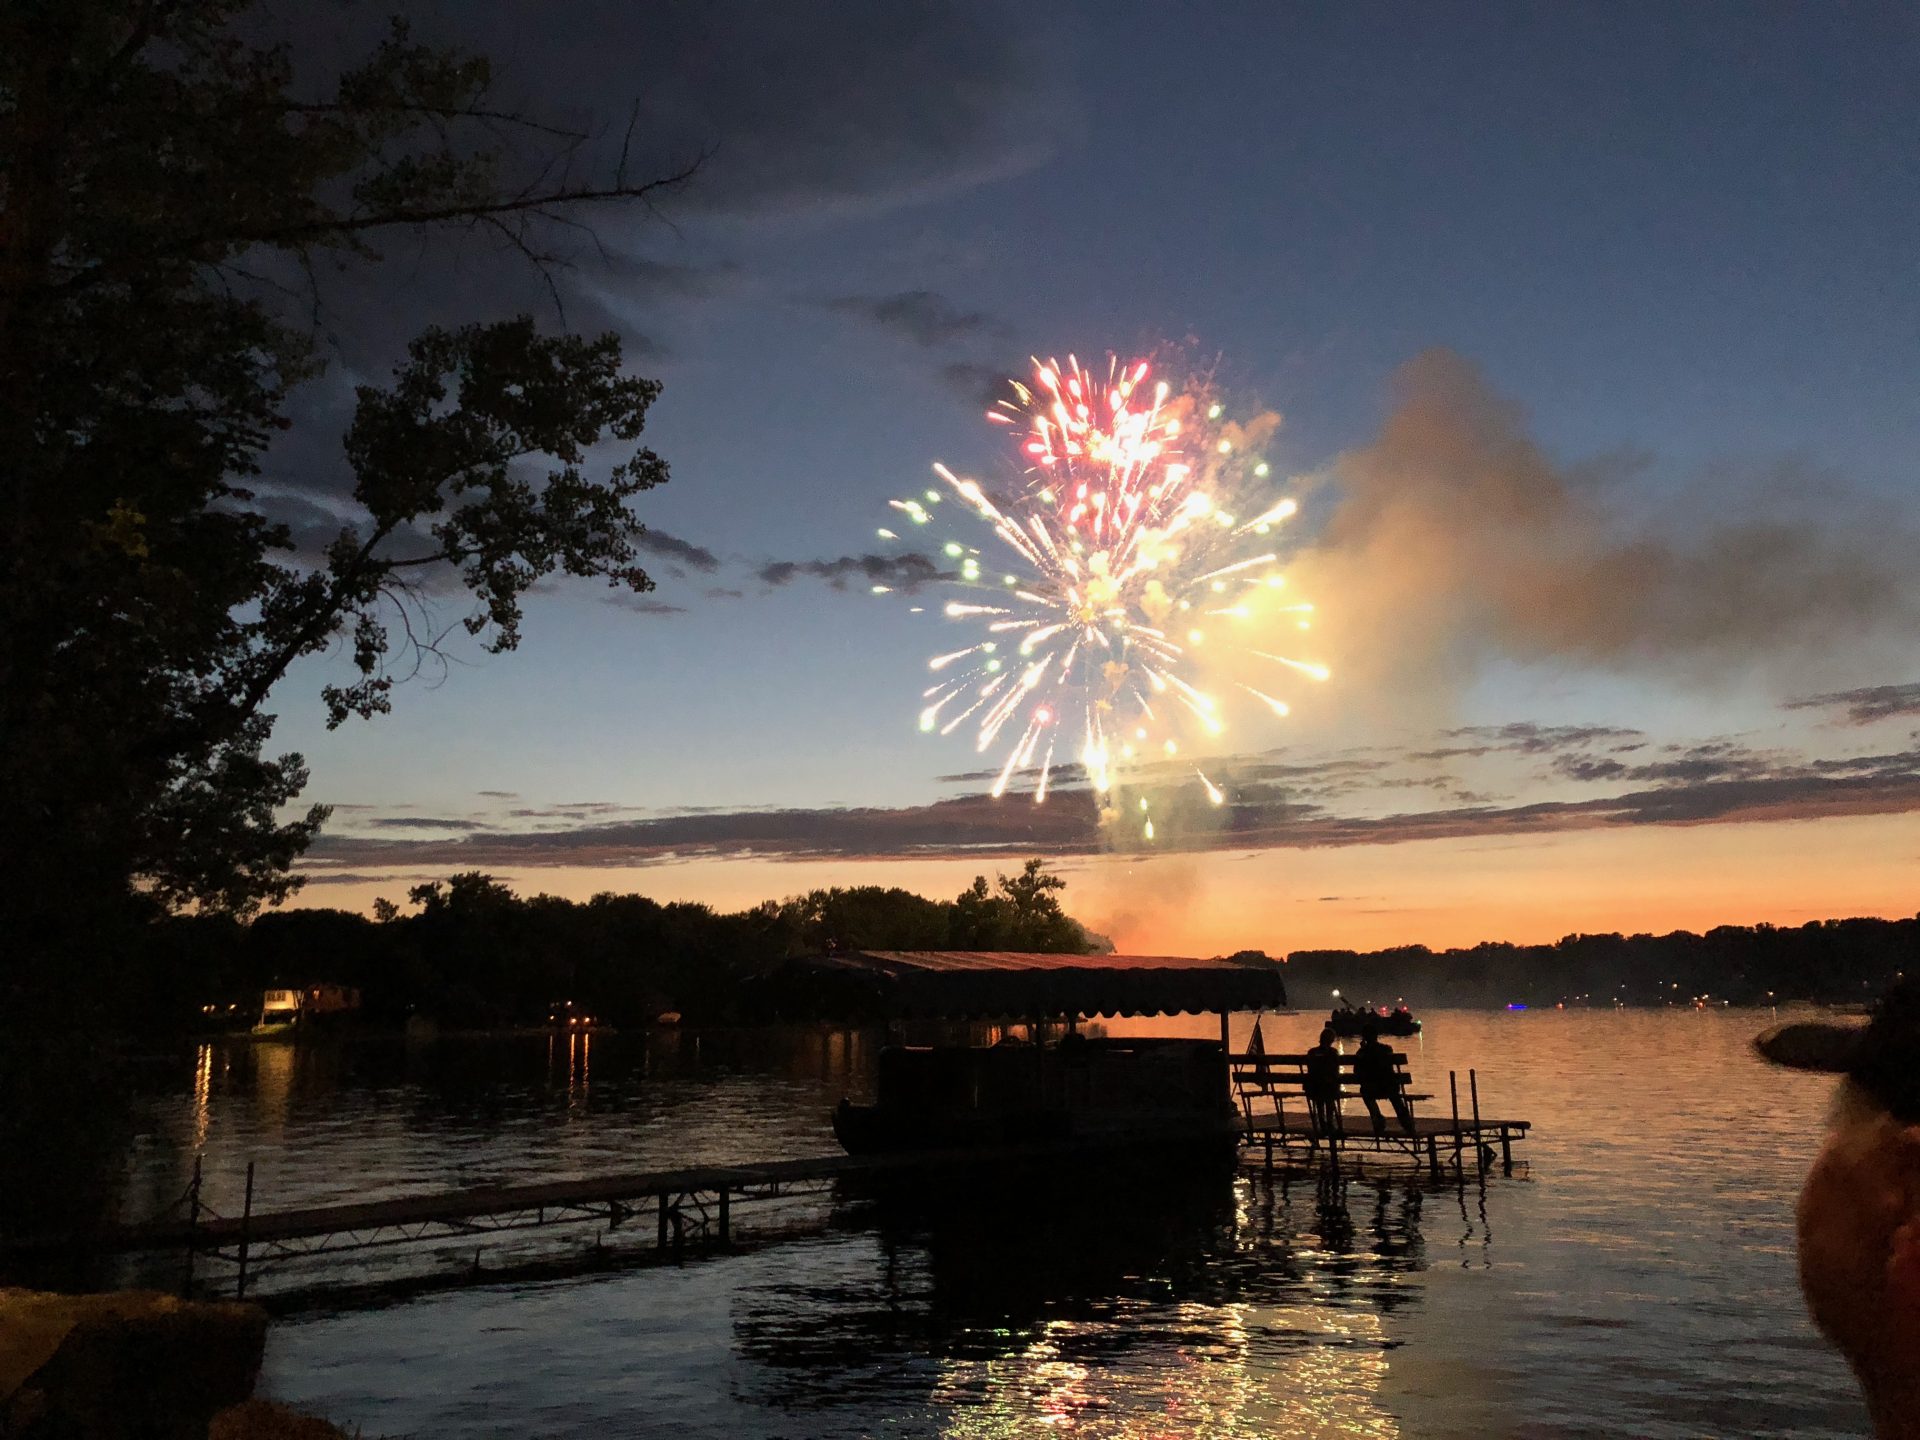 Crystal Lake Fireworks Burnsville, MN 4th of July Fireworks